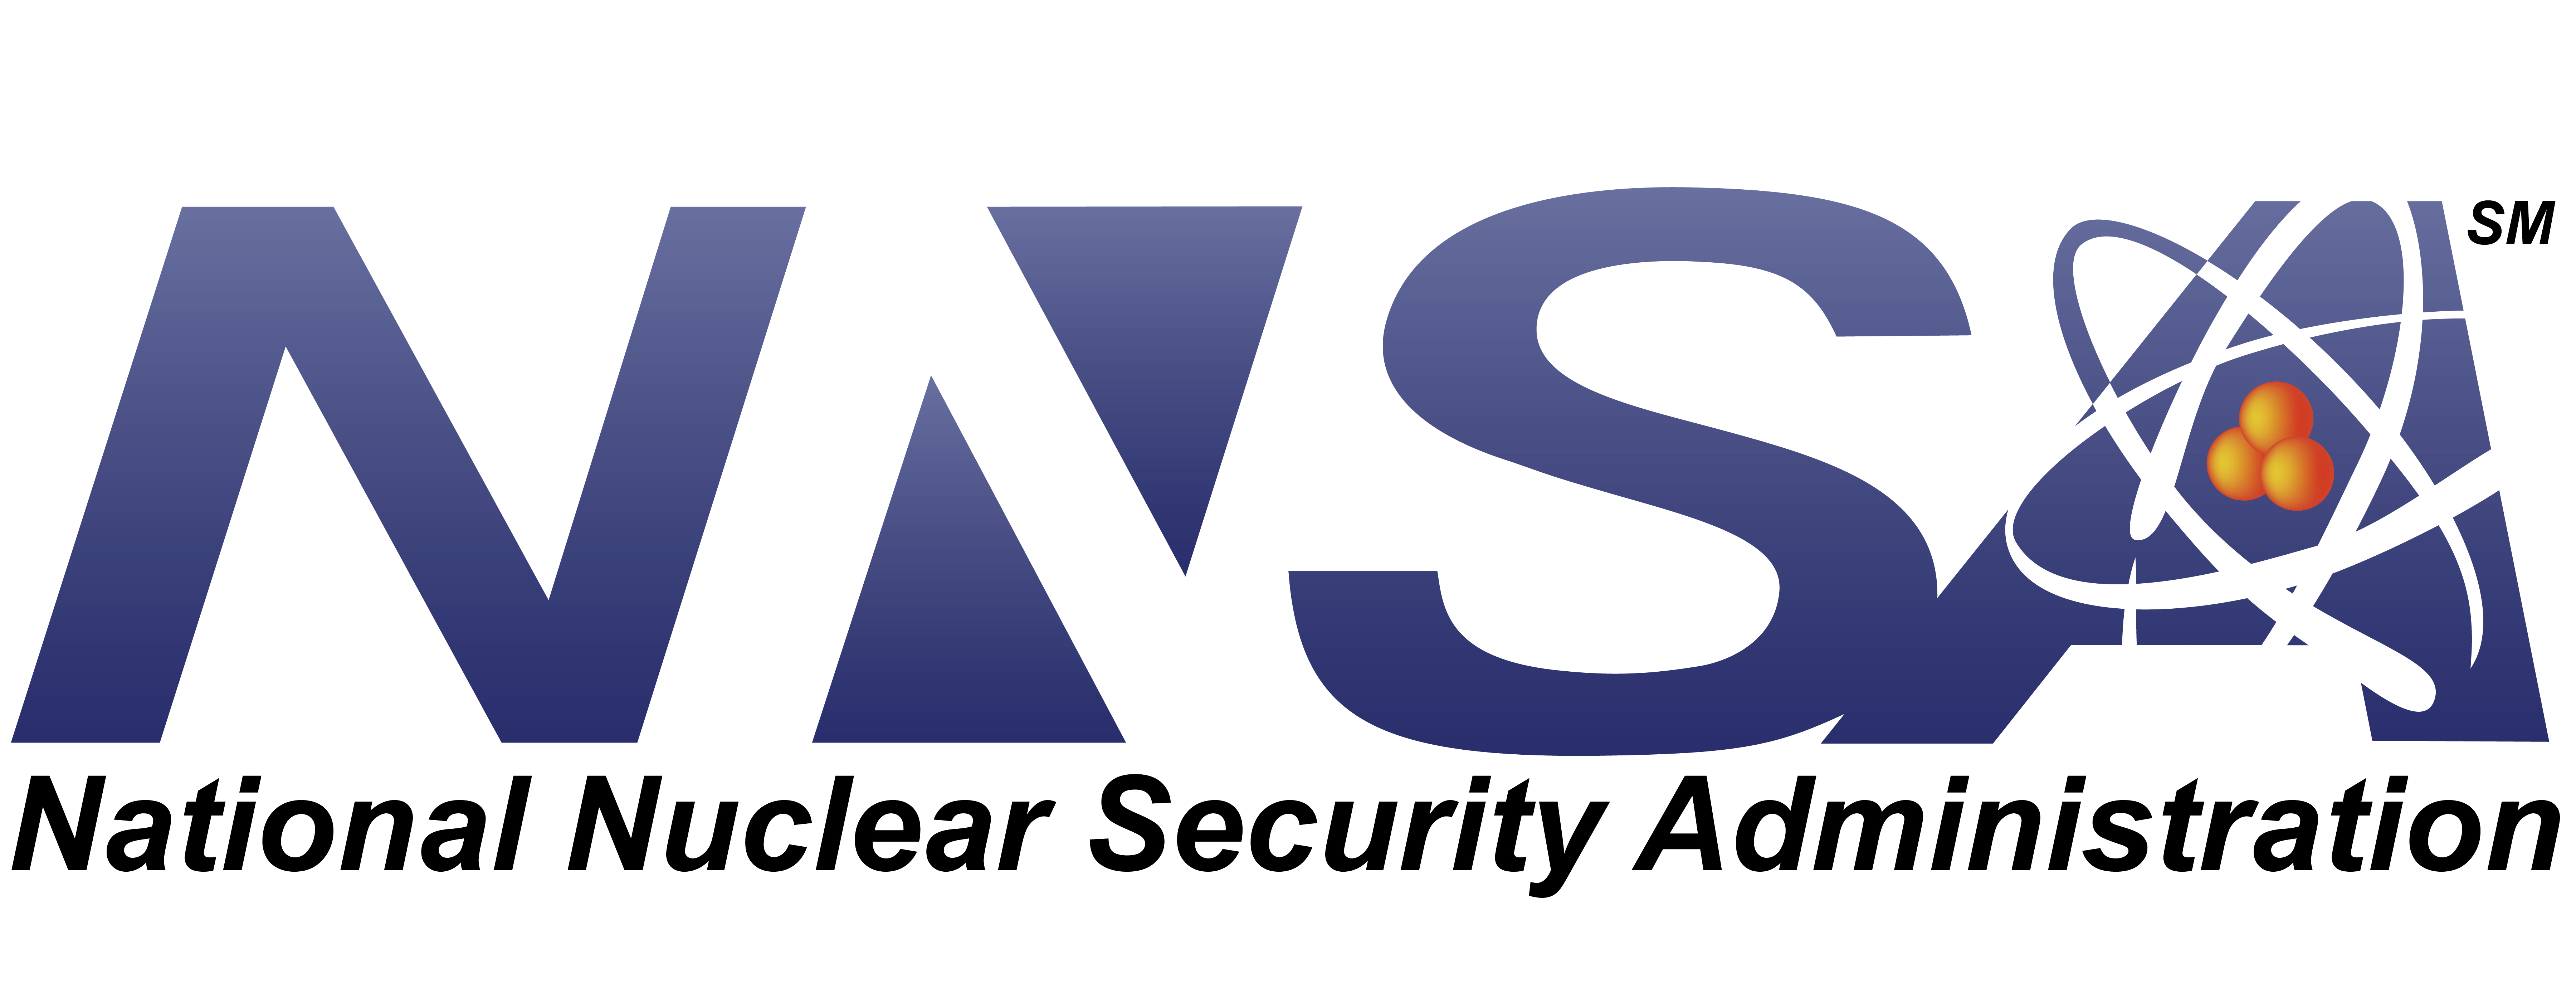 National Nuclear Security Administration (NNSA)